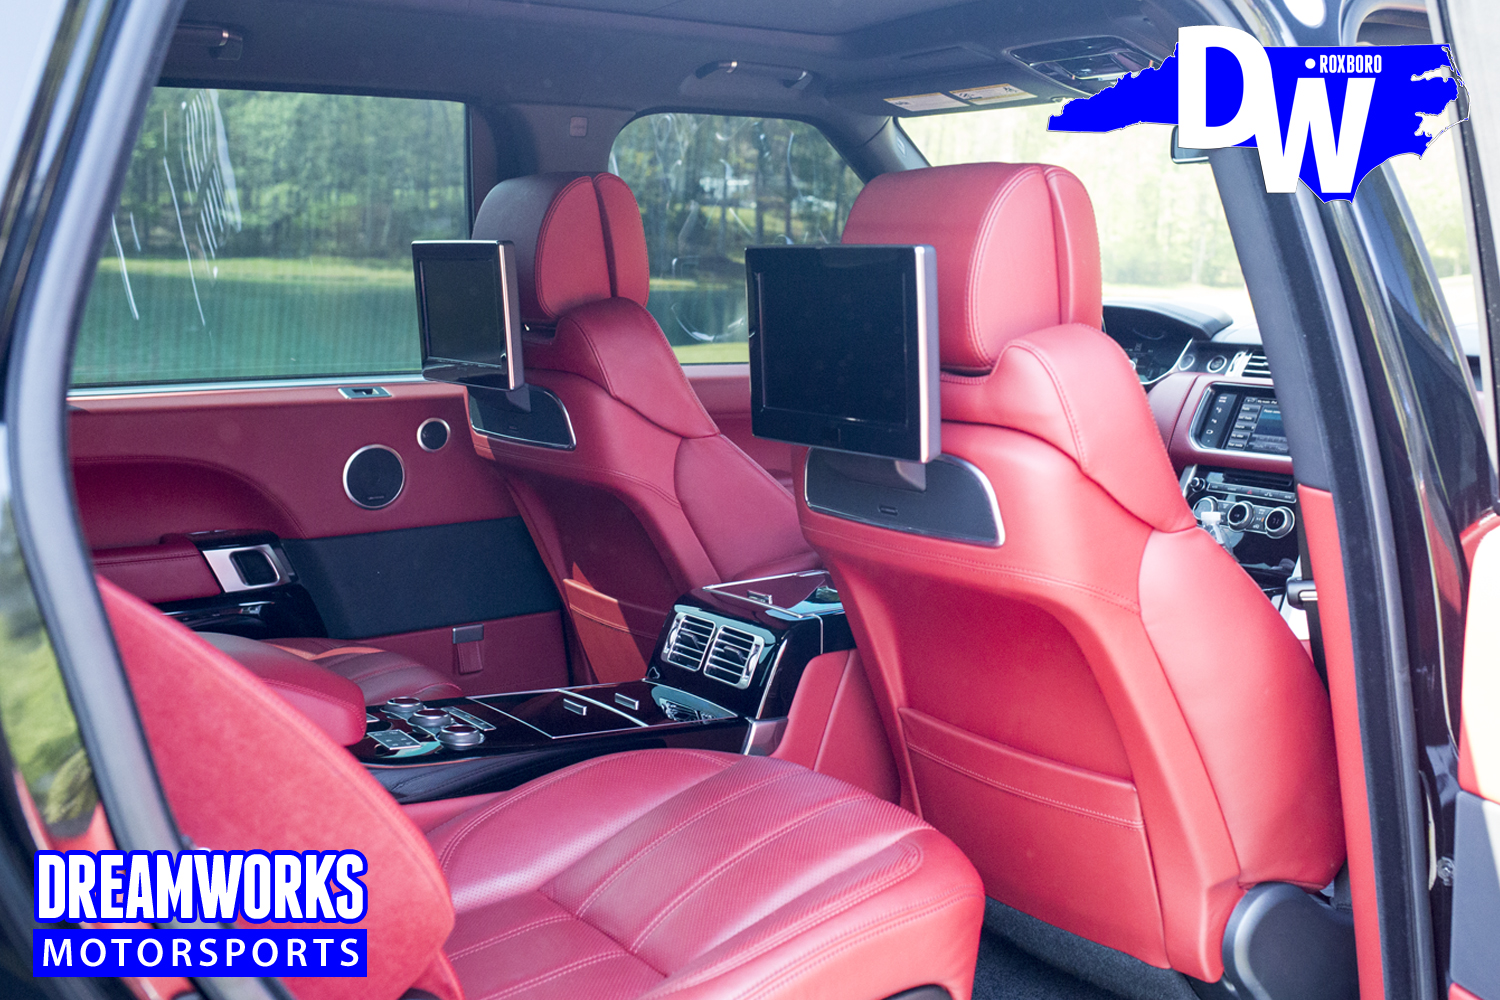 Satin-Black-Range-Rover-Dreamworks-Motorsports-interior-2.jpg